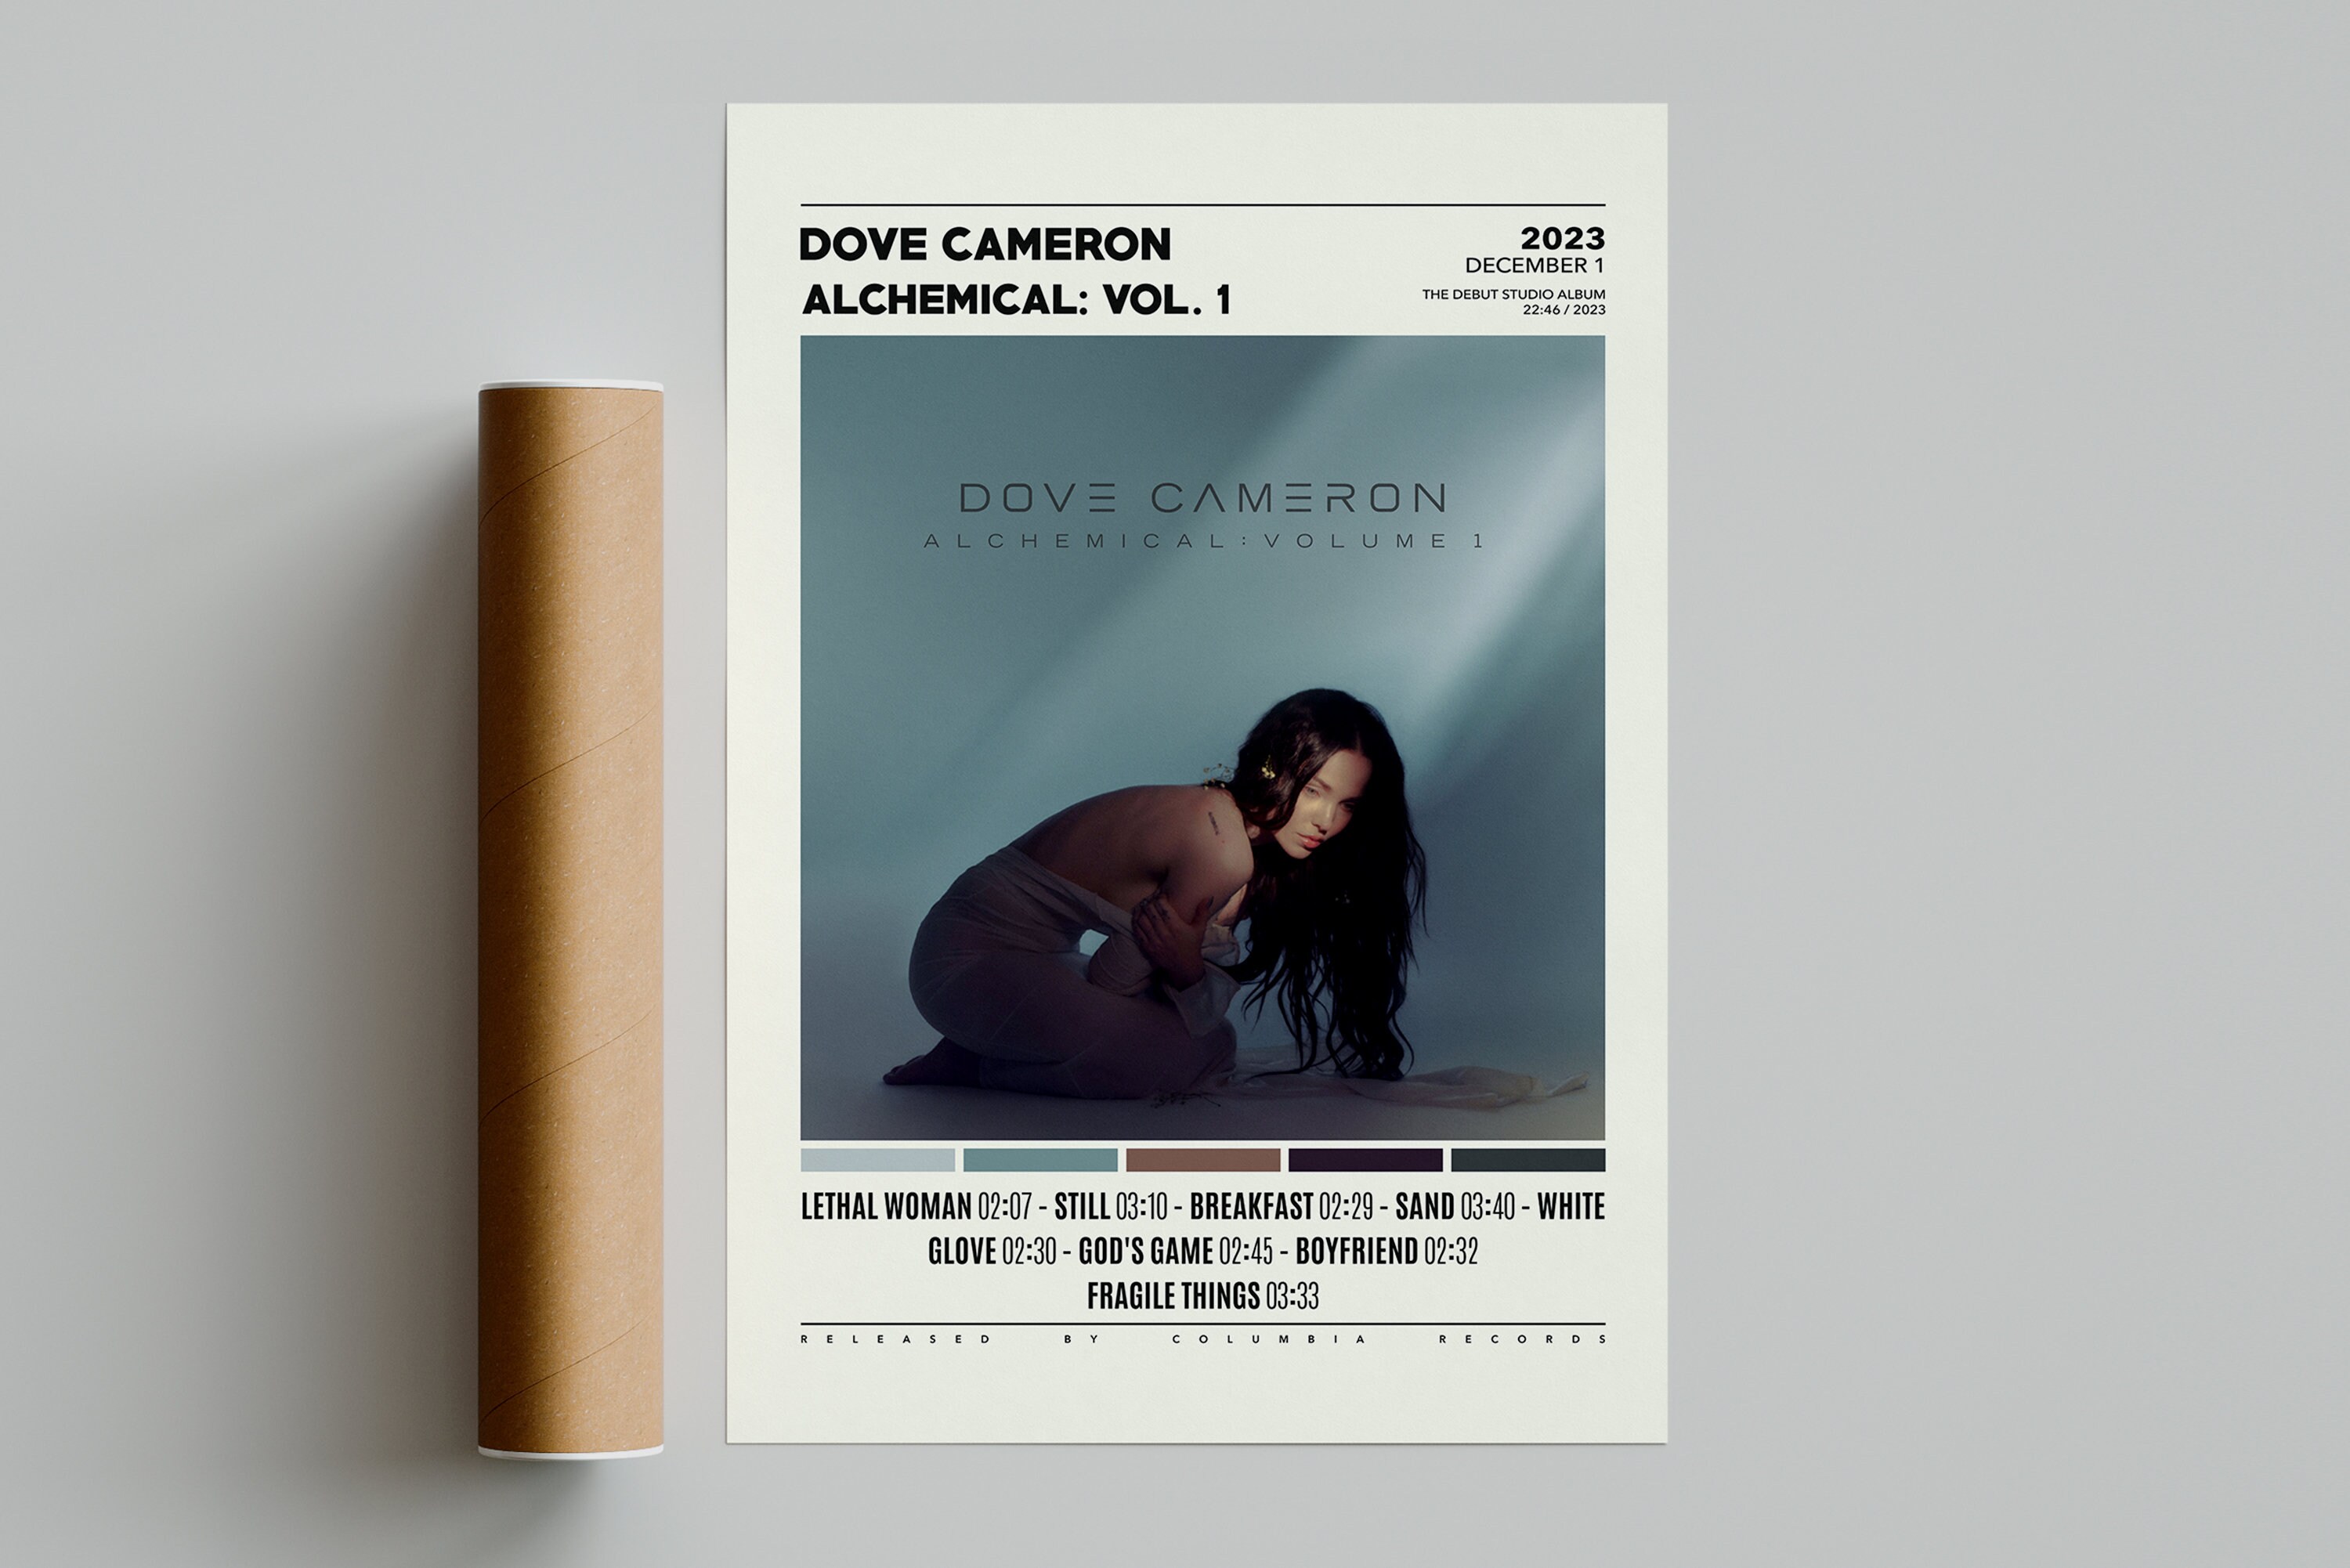 Dove Cameron – God's Game Lyrics